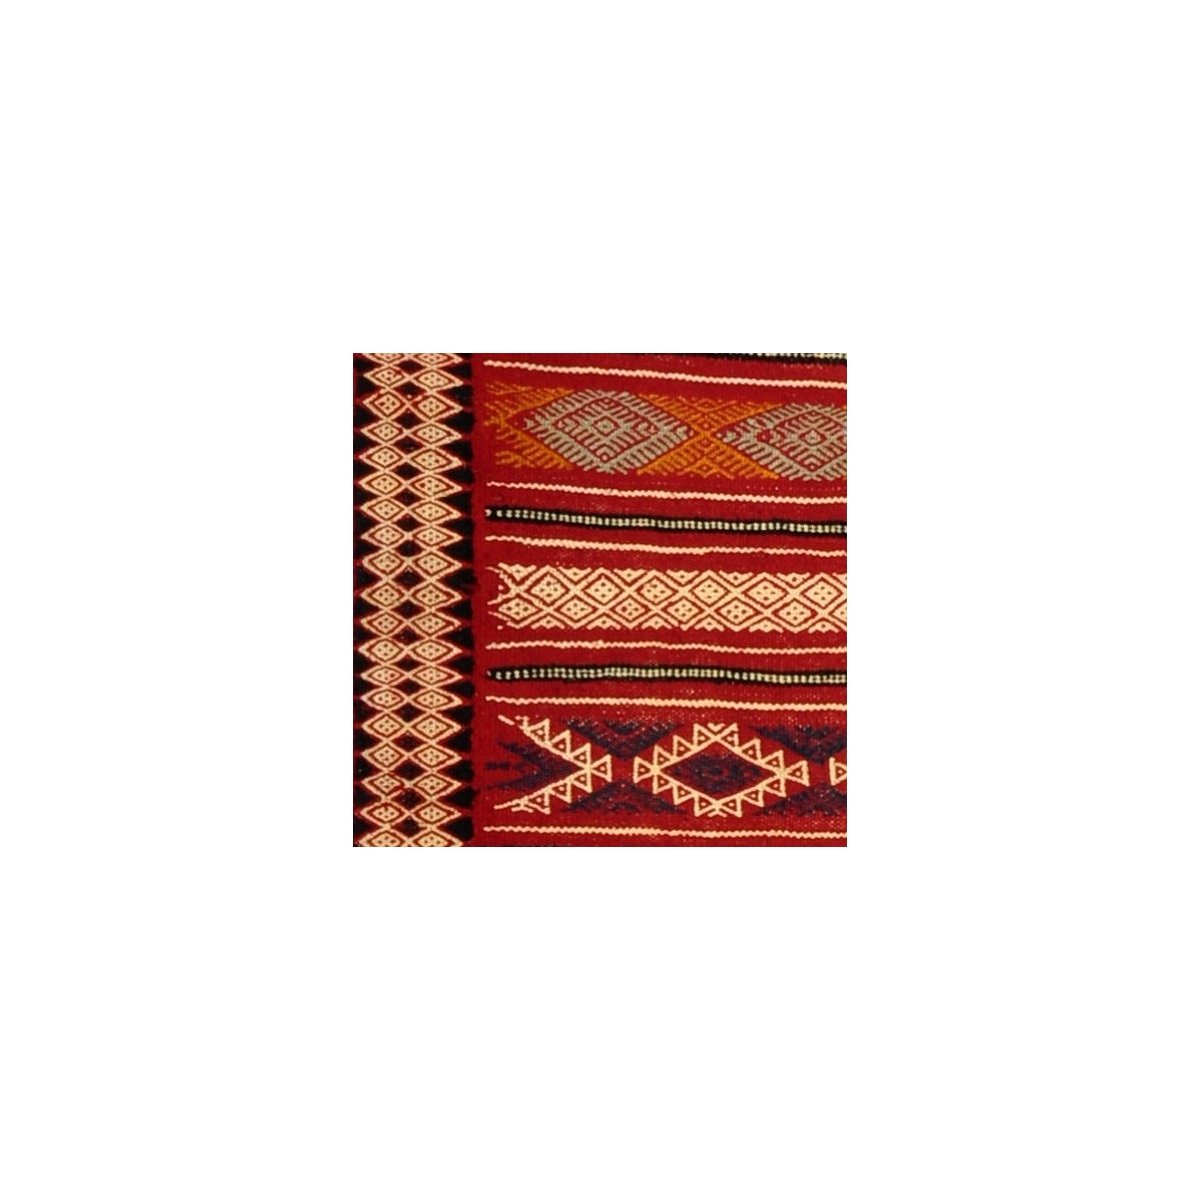 Berber tapijt Tapijt Kilim Yakout 100x200 Veelkleurig (Handgeweven, Wol, Tunesië) Tunesisch kilimdeken, Marokkaanse stijl. Recht